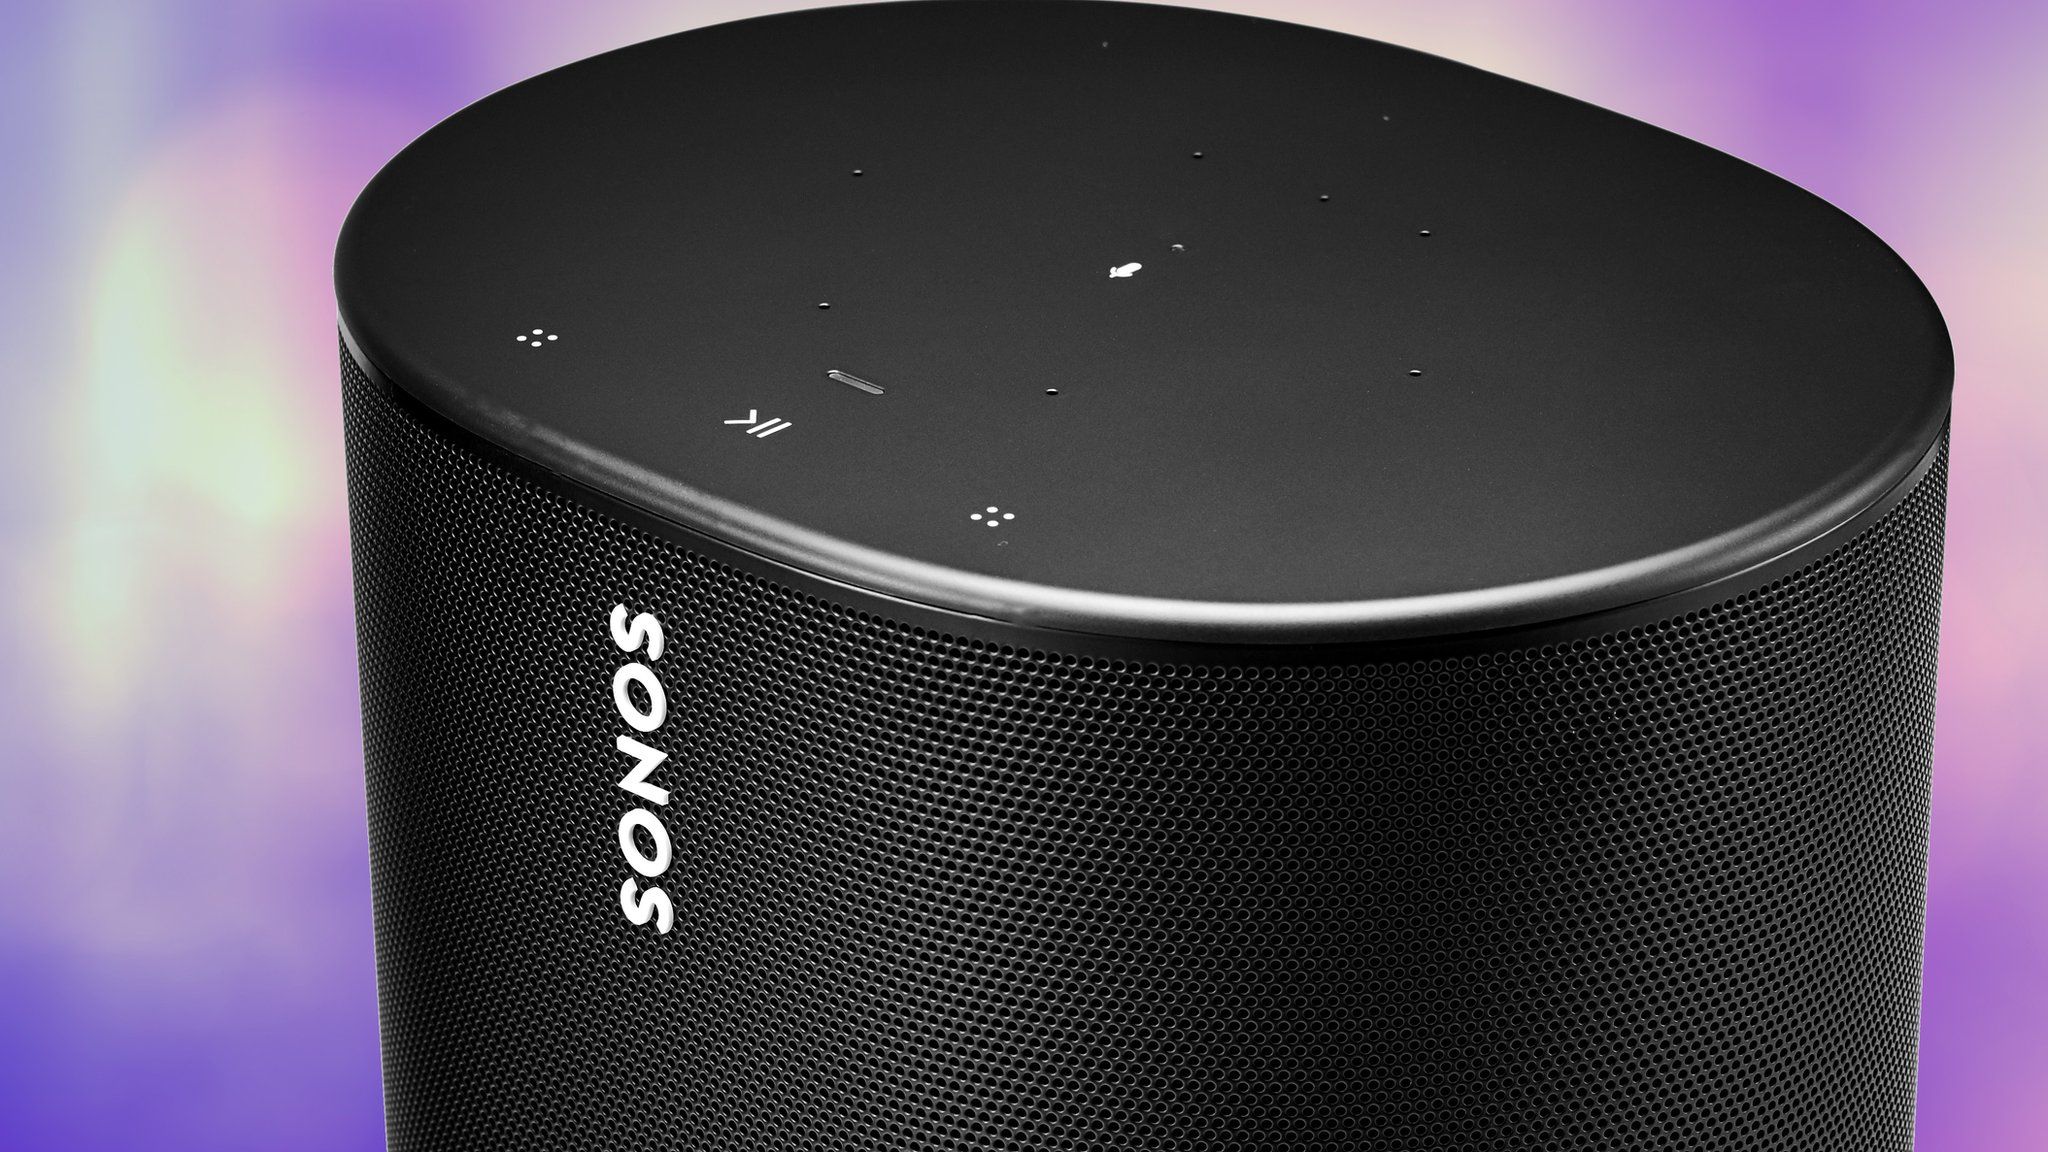 monarki Objector Rund Sonos U-turn over 'bricking' its smart speakers - BBC News